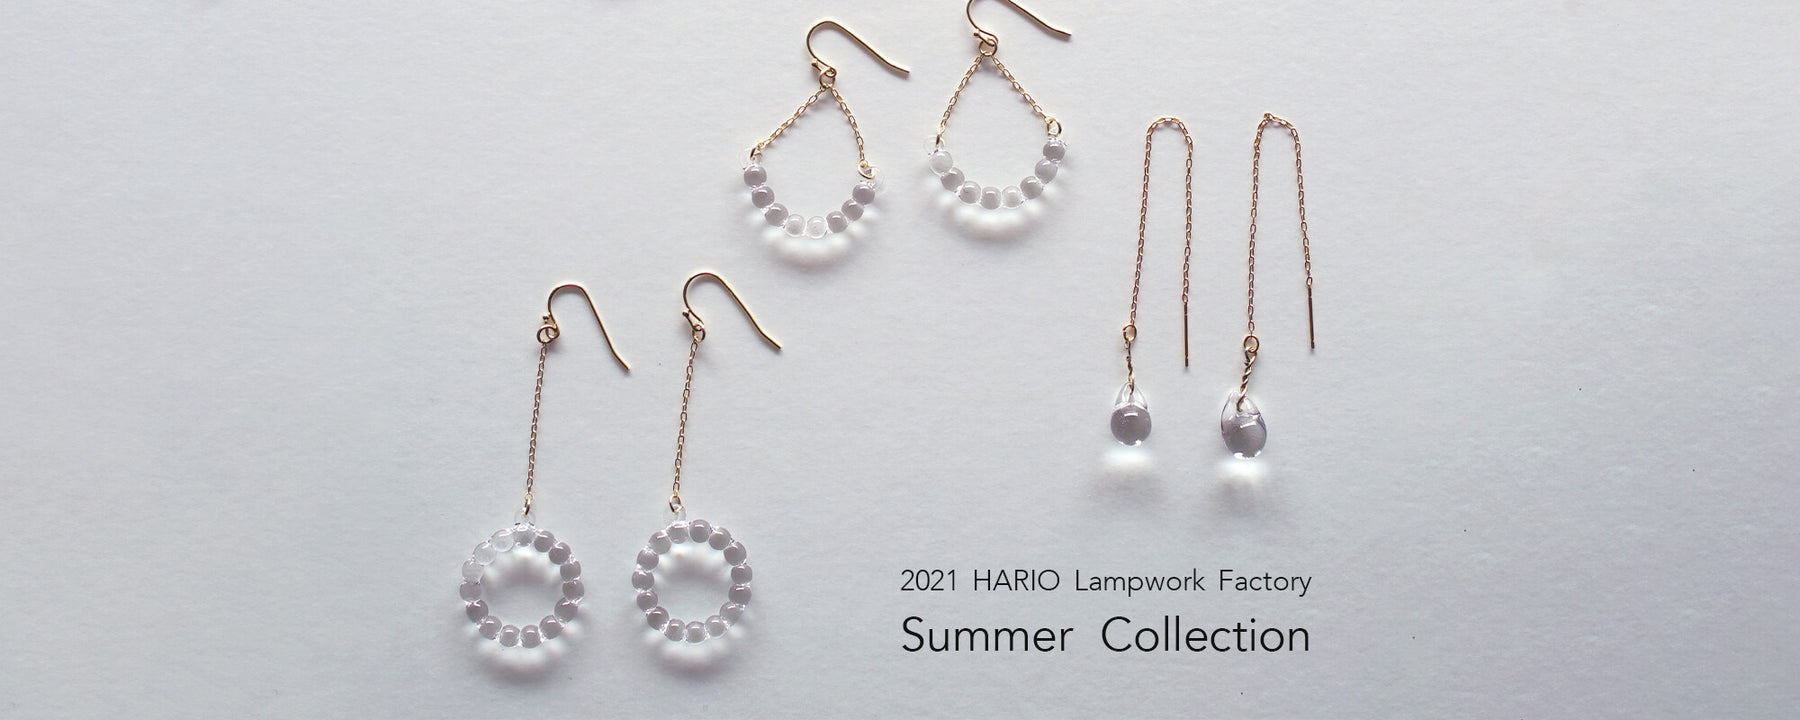 HARIO Lampwork Factory Summer Collection